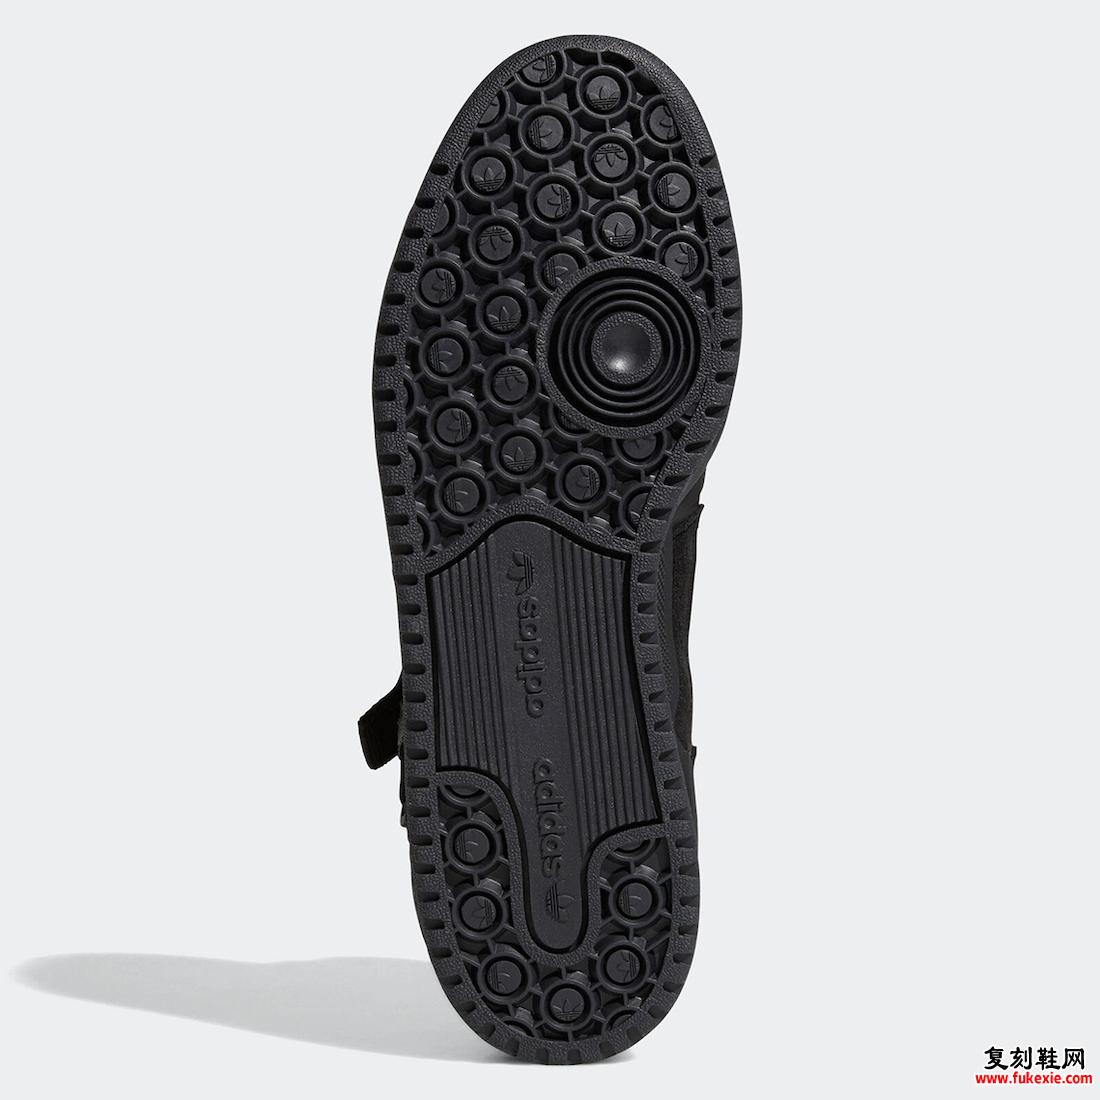 adidas Forum High Gore-Tex Core Black Q46363 发布日期